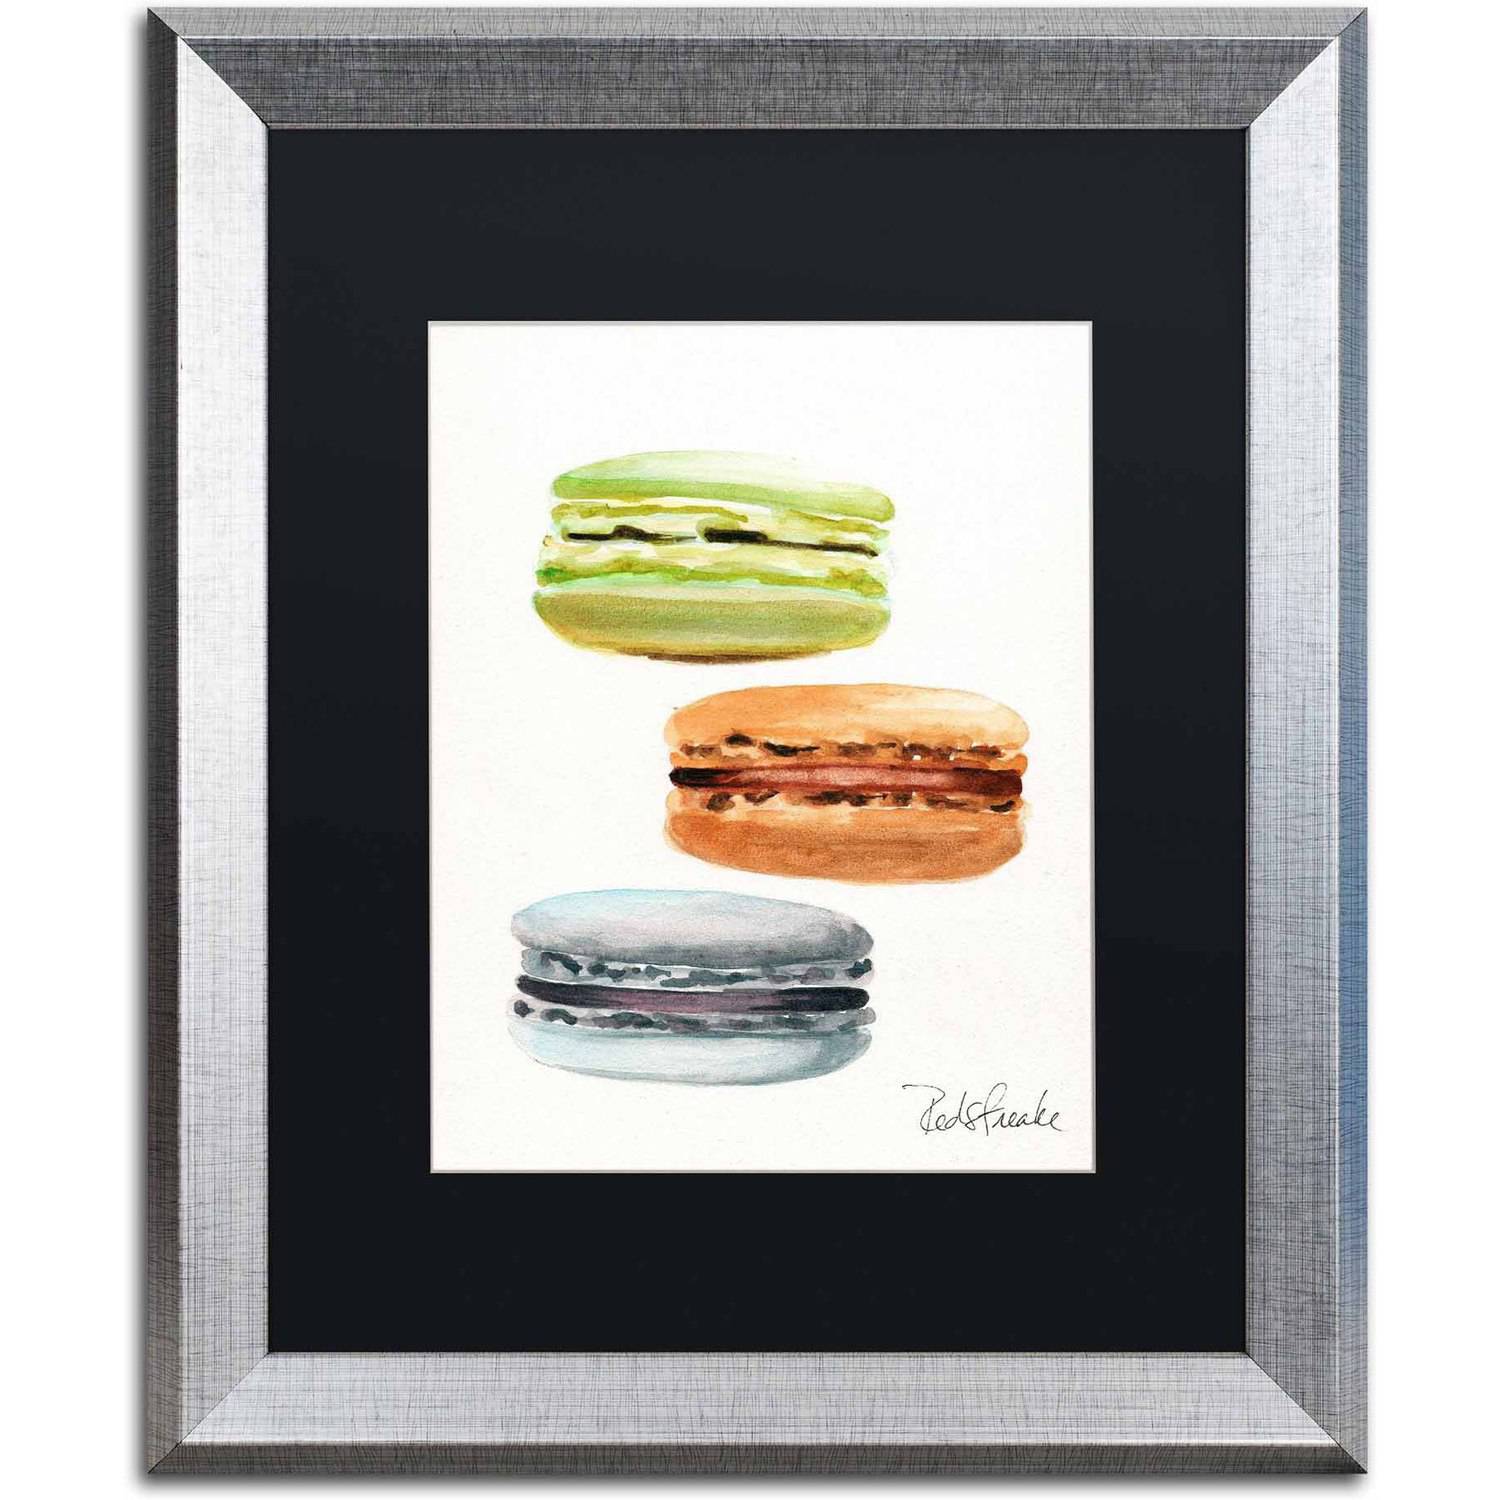 Trademark Fine Art "3 Macarons with Words" Canvas Art by Jennifer Redstreake Black Matte, Silver Frame - image 1 of 3